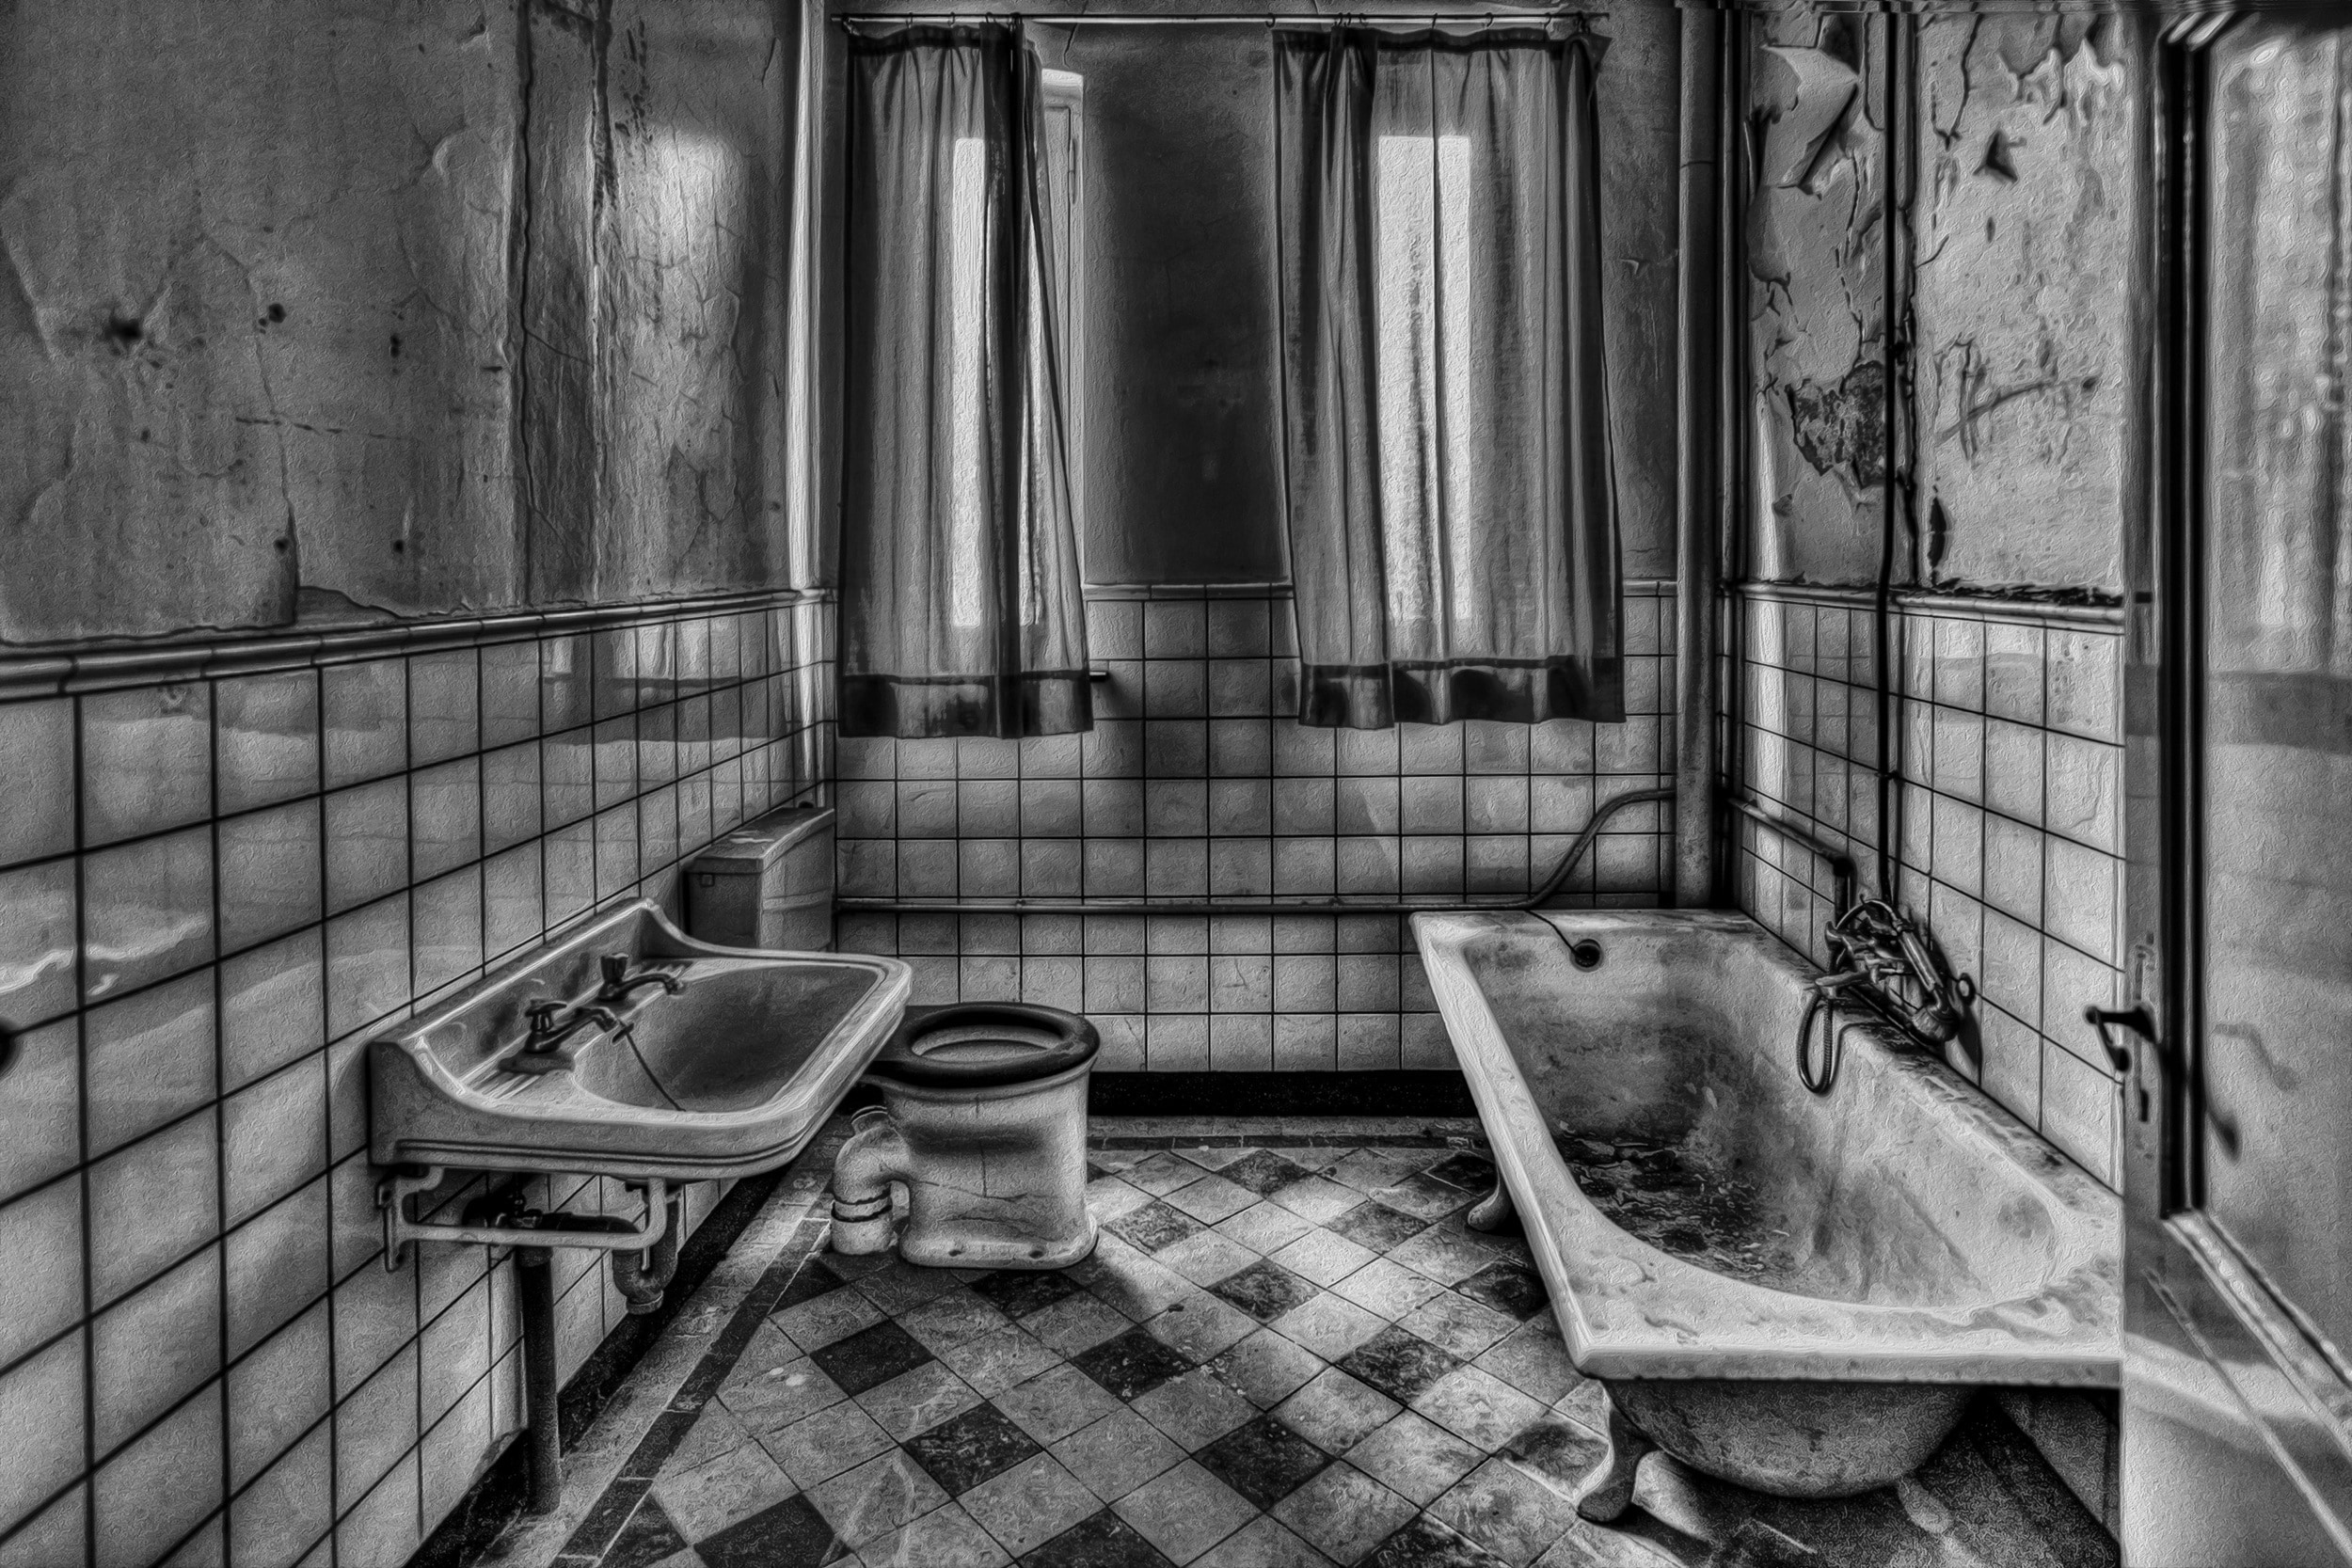 grayscale photo of toilet roomn